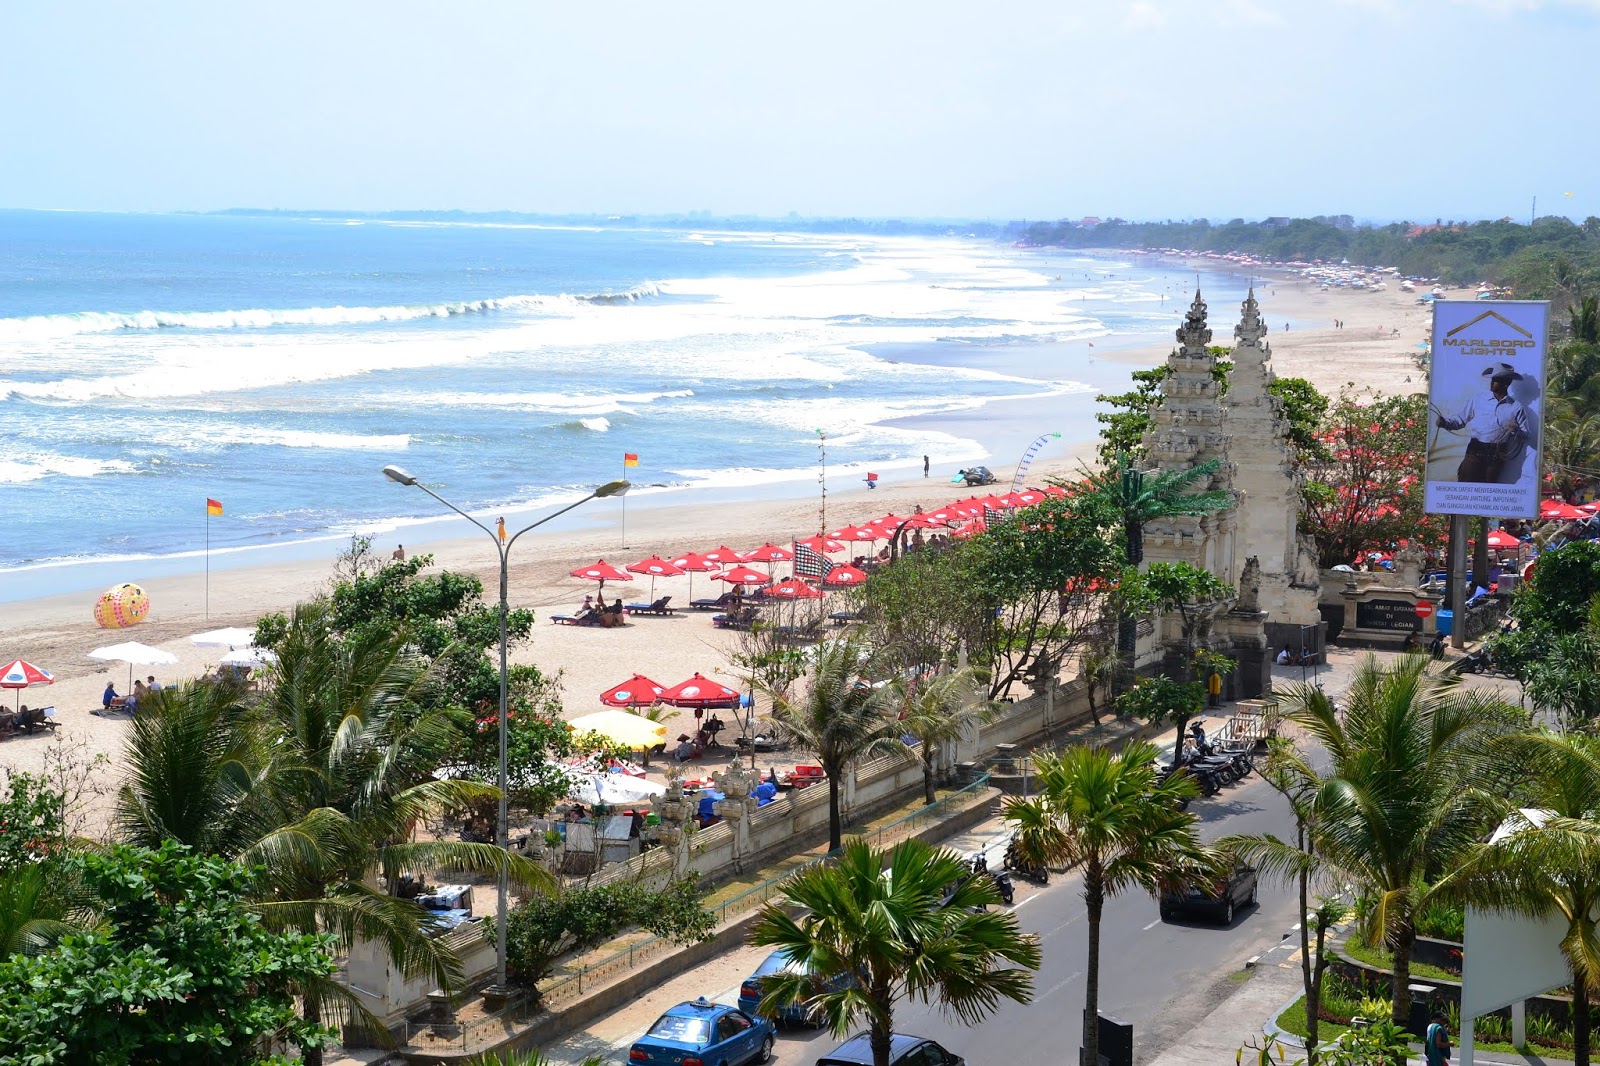 Harga Wisata Pantai Kuta Bali